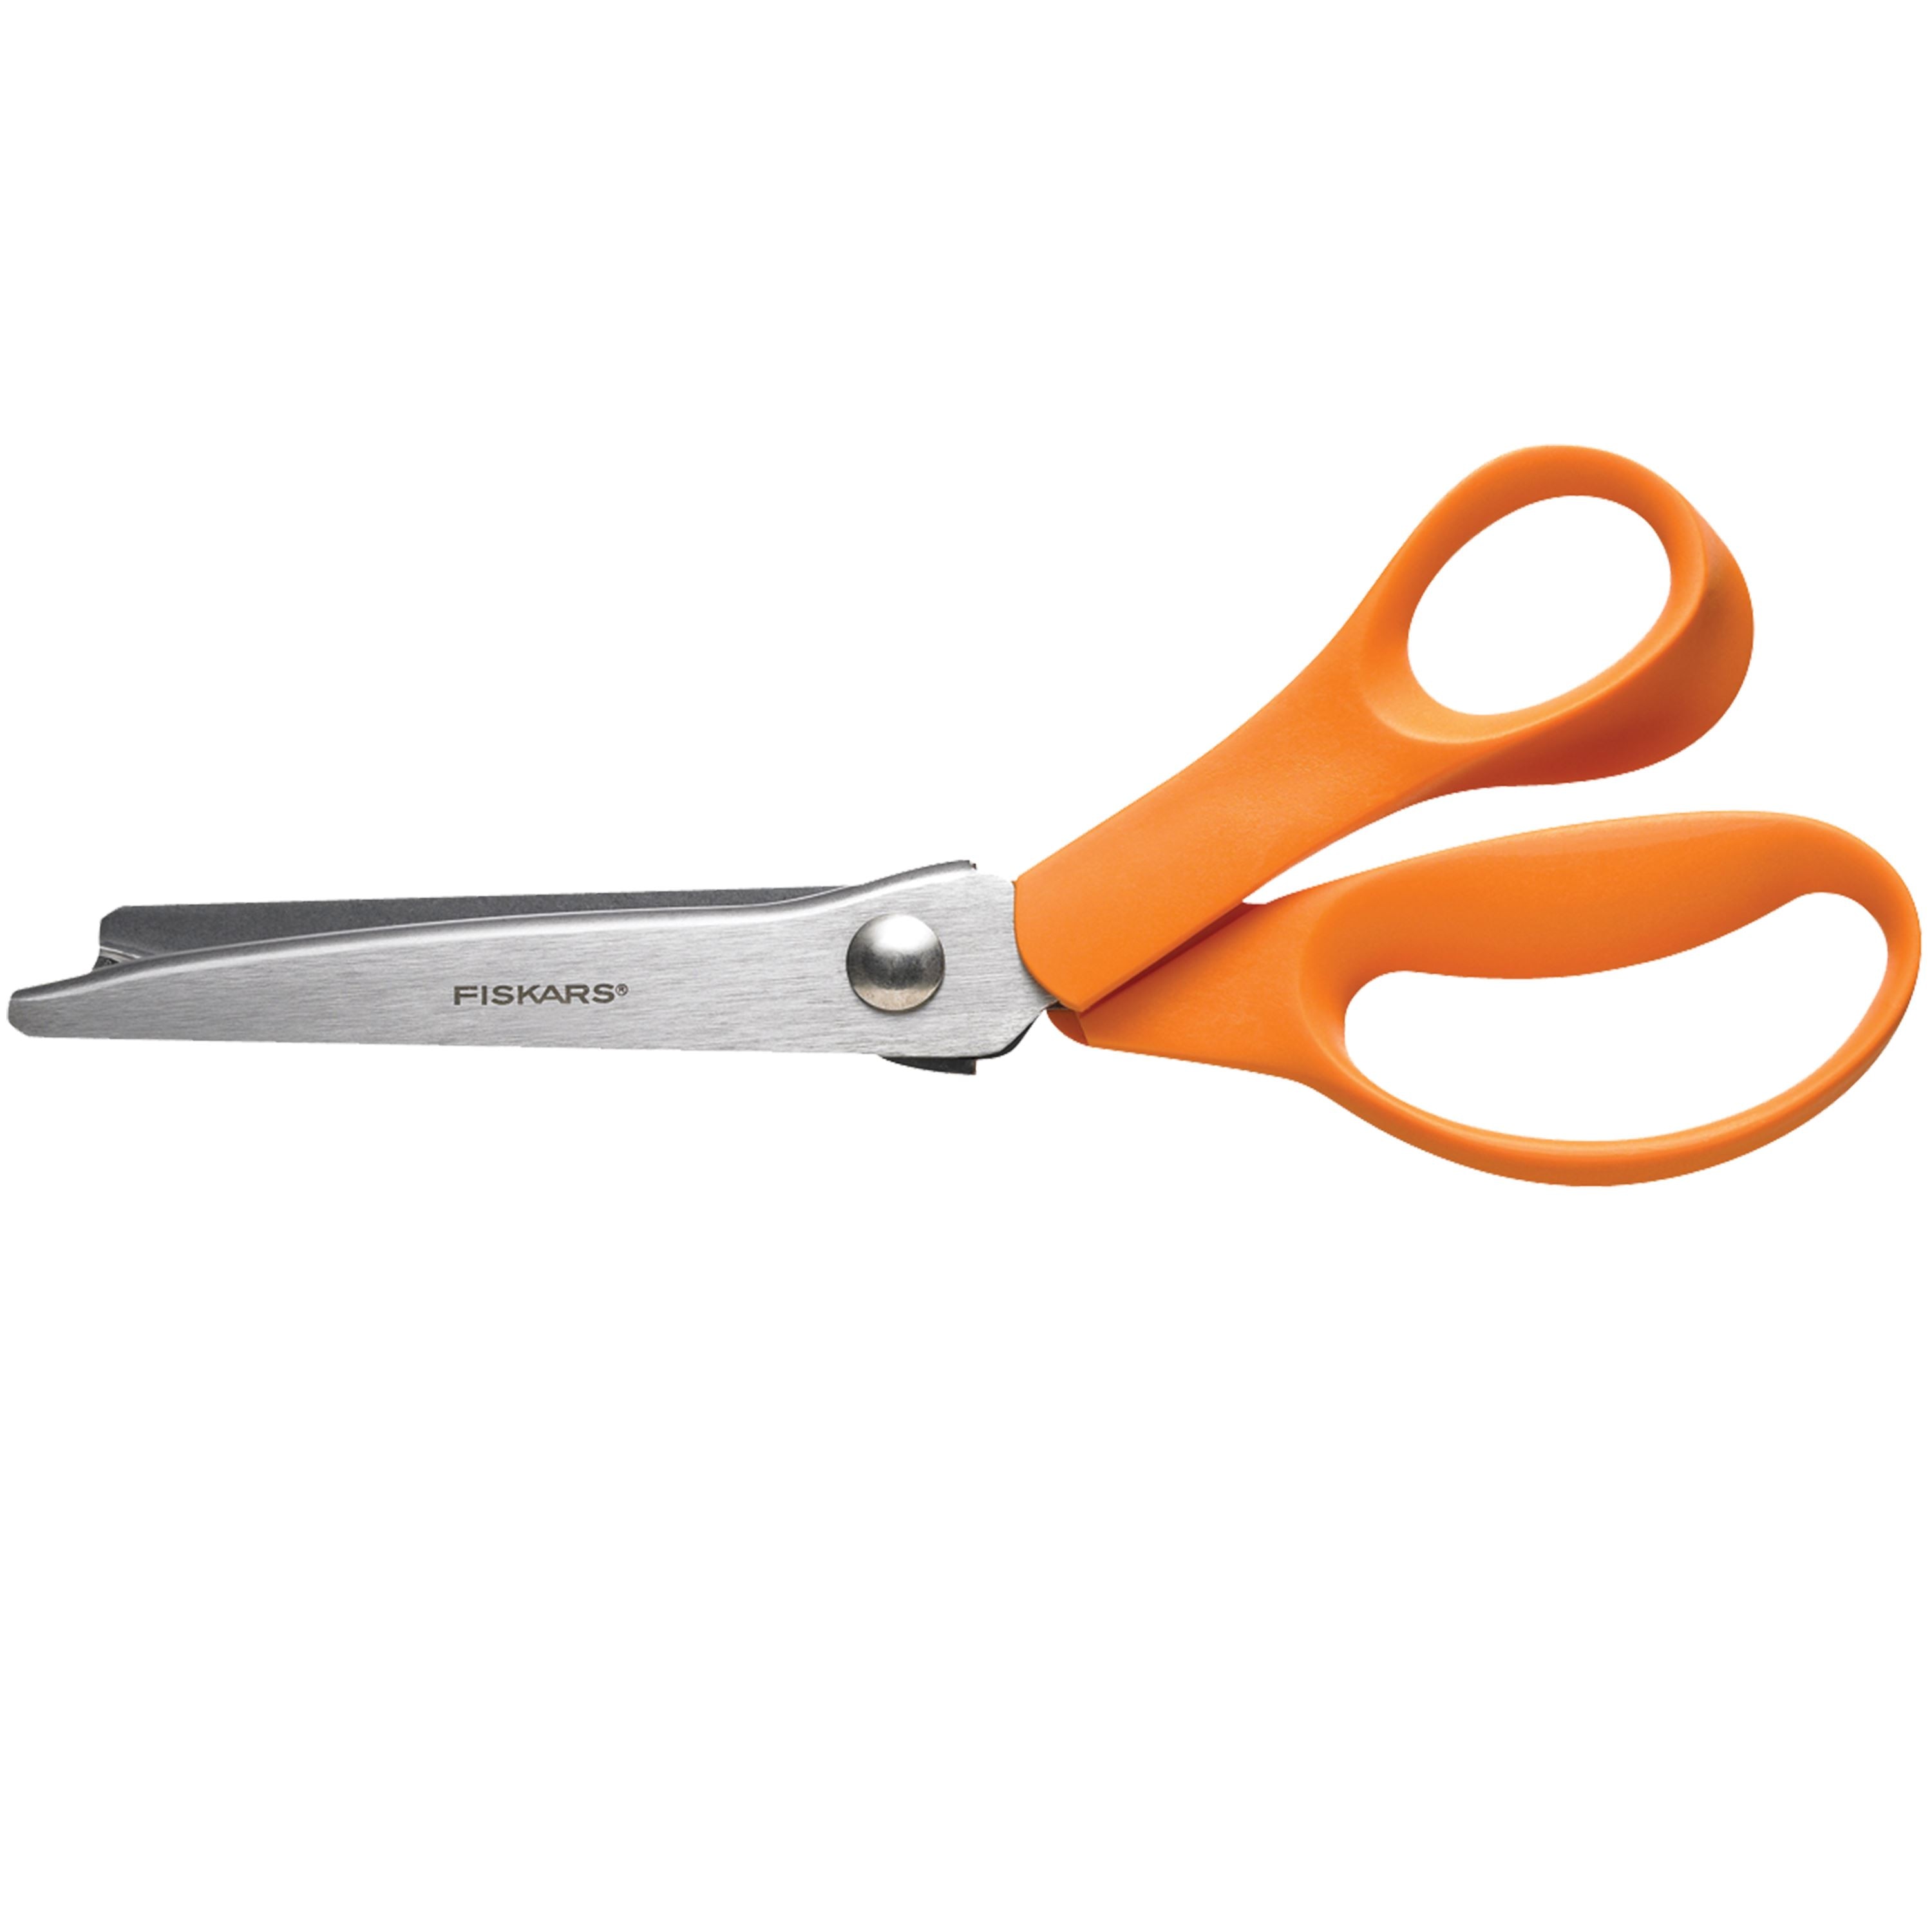 Fiskars Scissor 10.5 Easy Action Pinking Shears - 020335049802